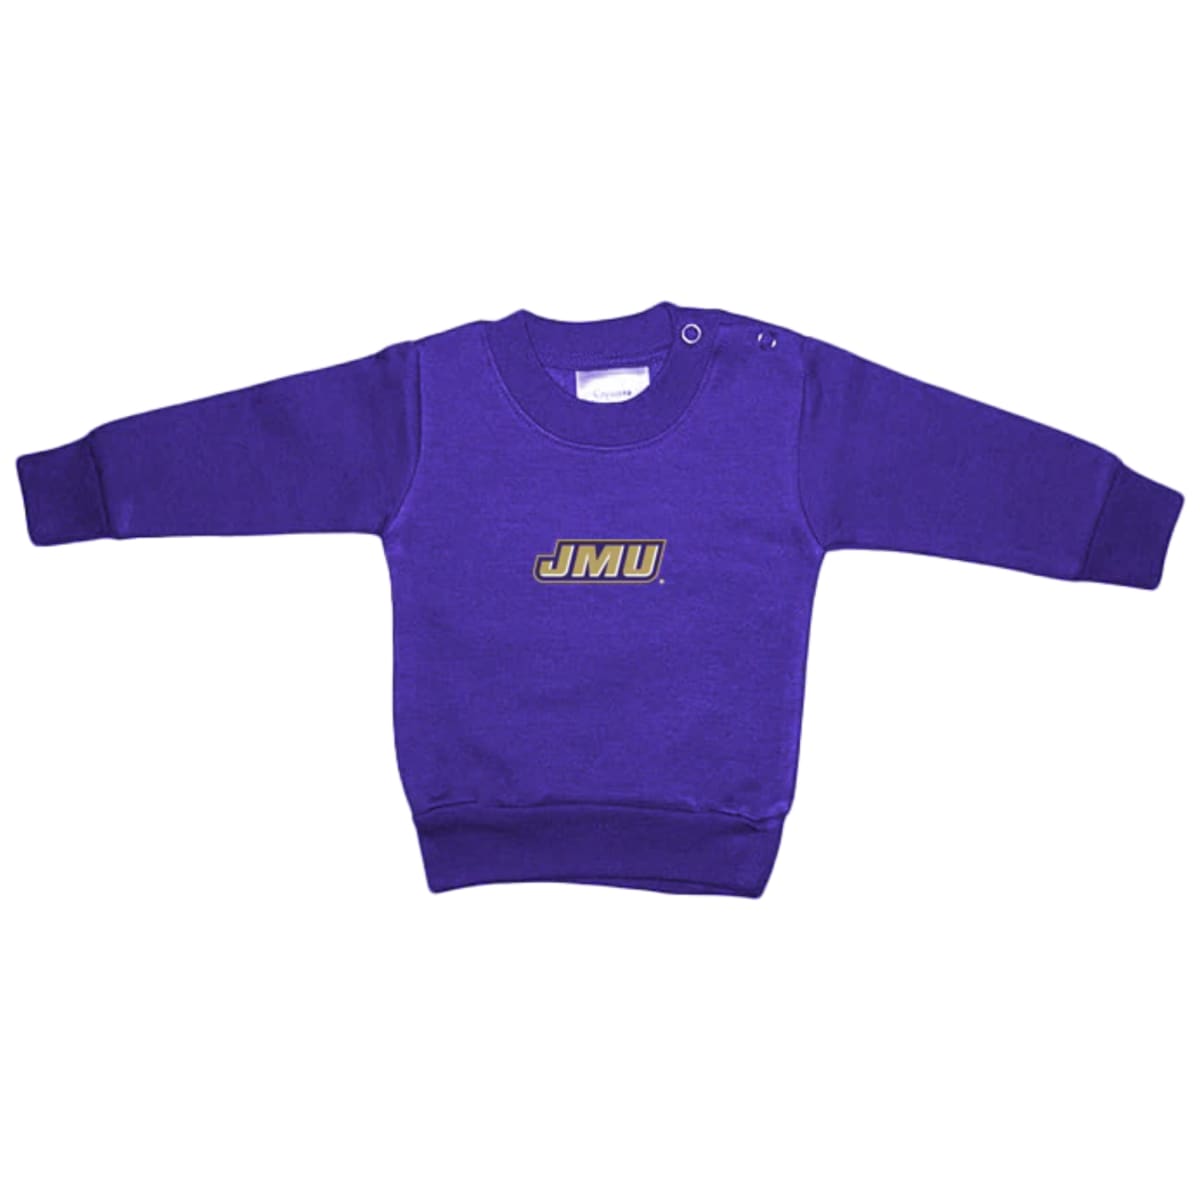 JMU Embroidered Infant/Toddler Sweatshirt - IN STOCK